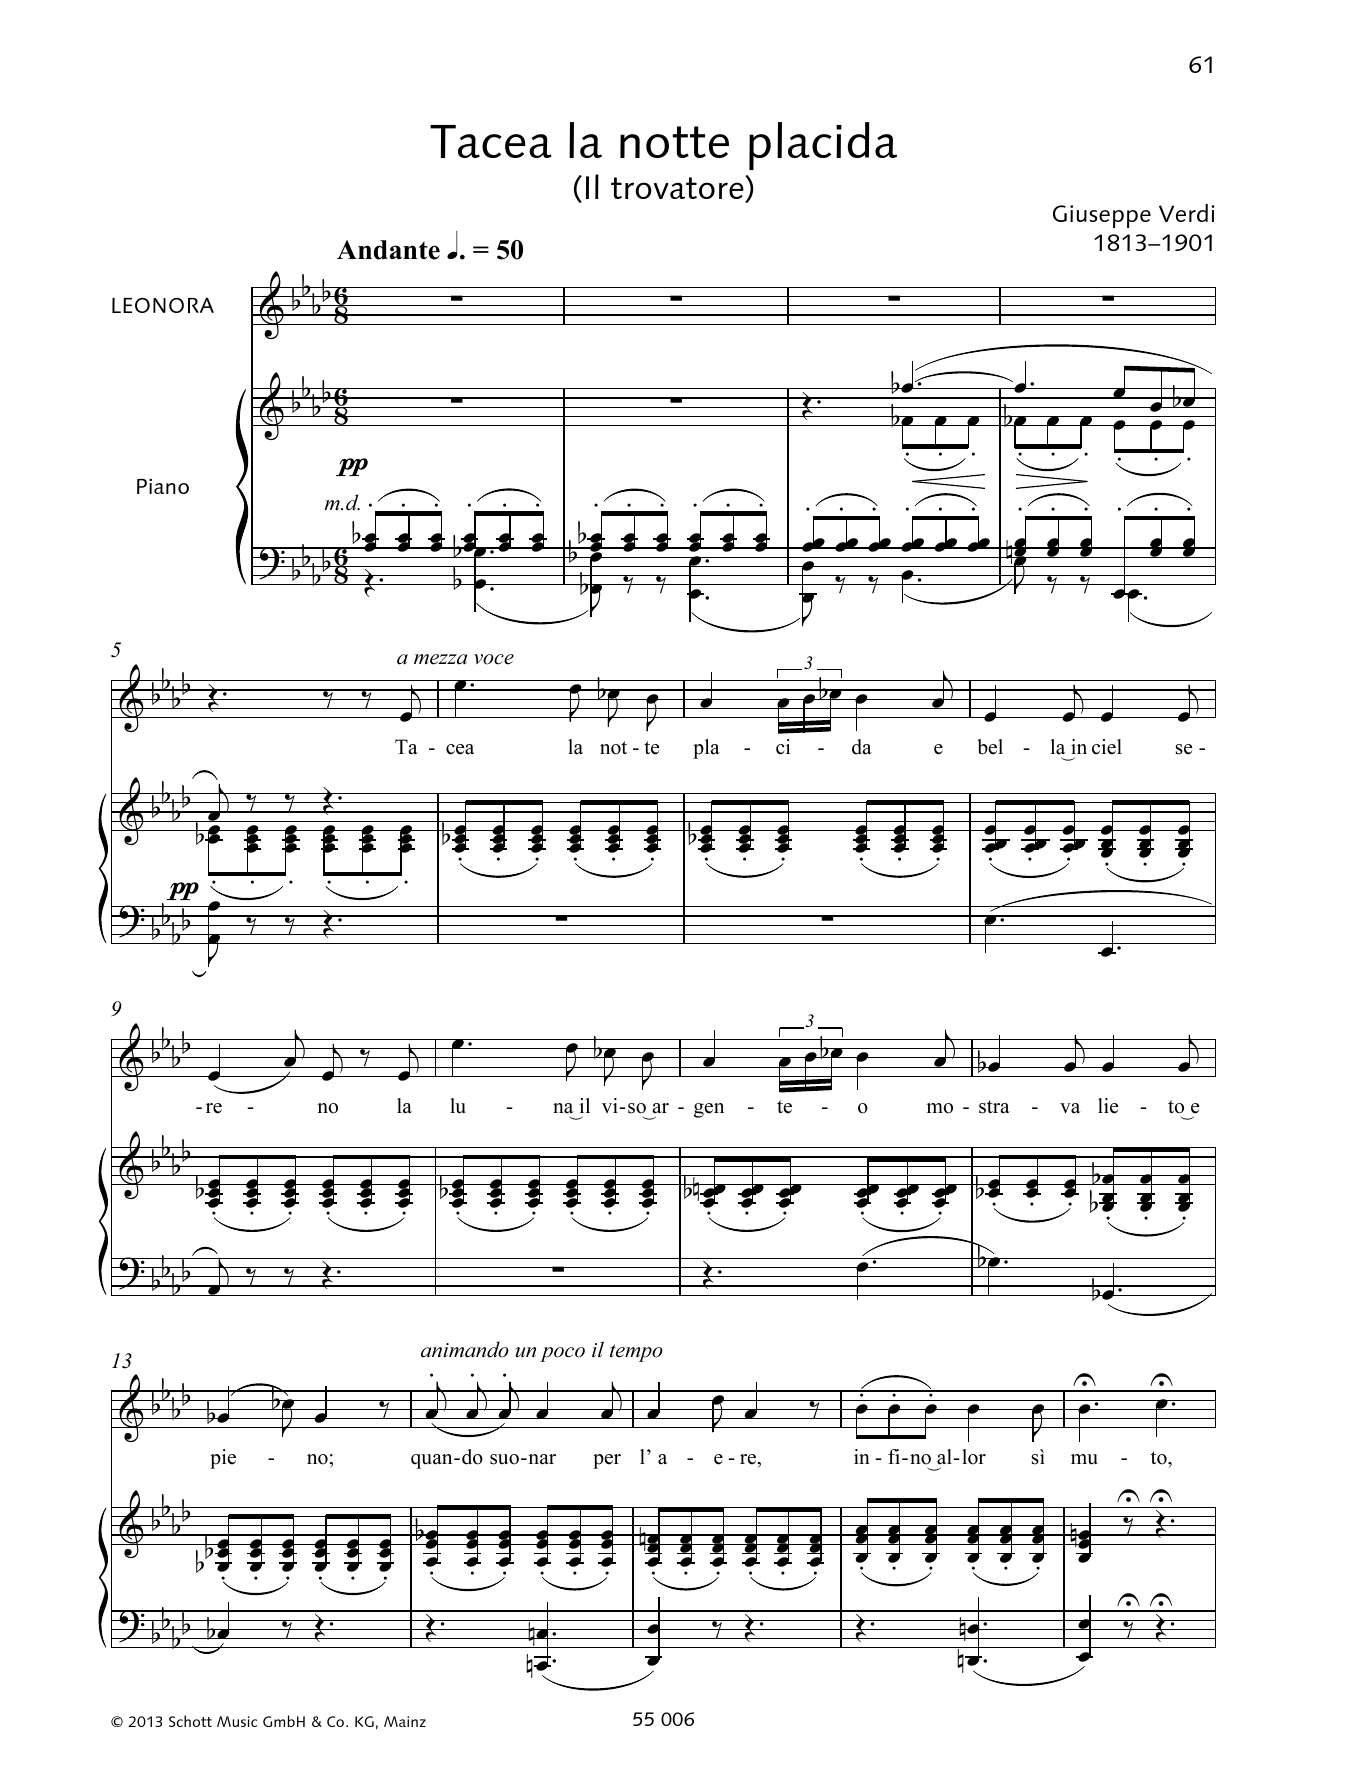 Giuseppe Verdi Tacea la notte placida Sheet Music Notes & Chords for Piano & Vocal - Download or Print PDF